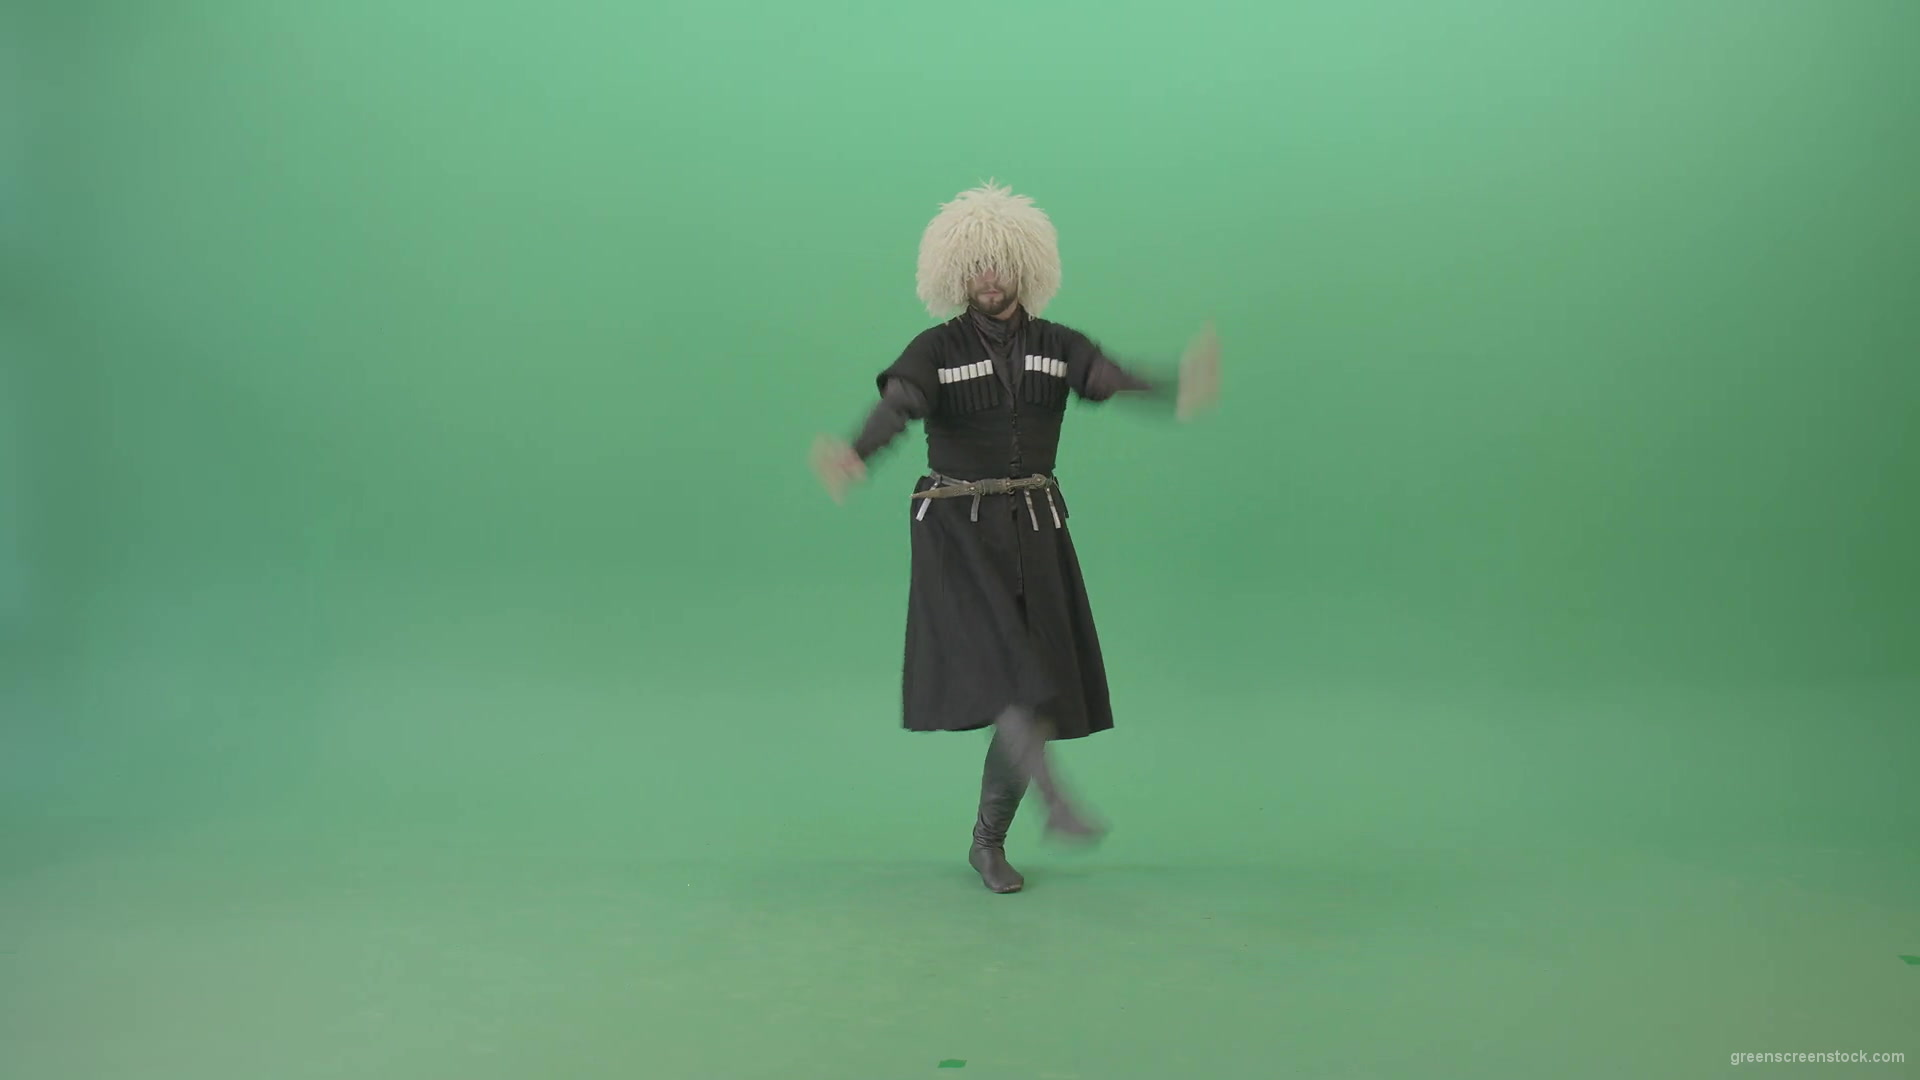 Caucasian-Man-jumping-on-one-leg-in-folk-traditional-Georgia-Dance-on-Green-Screen-4K-Video-Footage-1920_002 Green Screen Stock